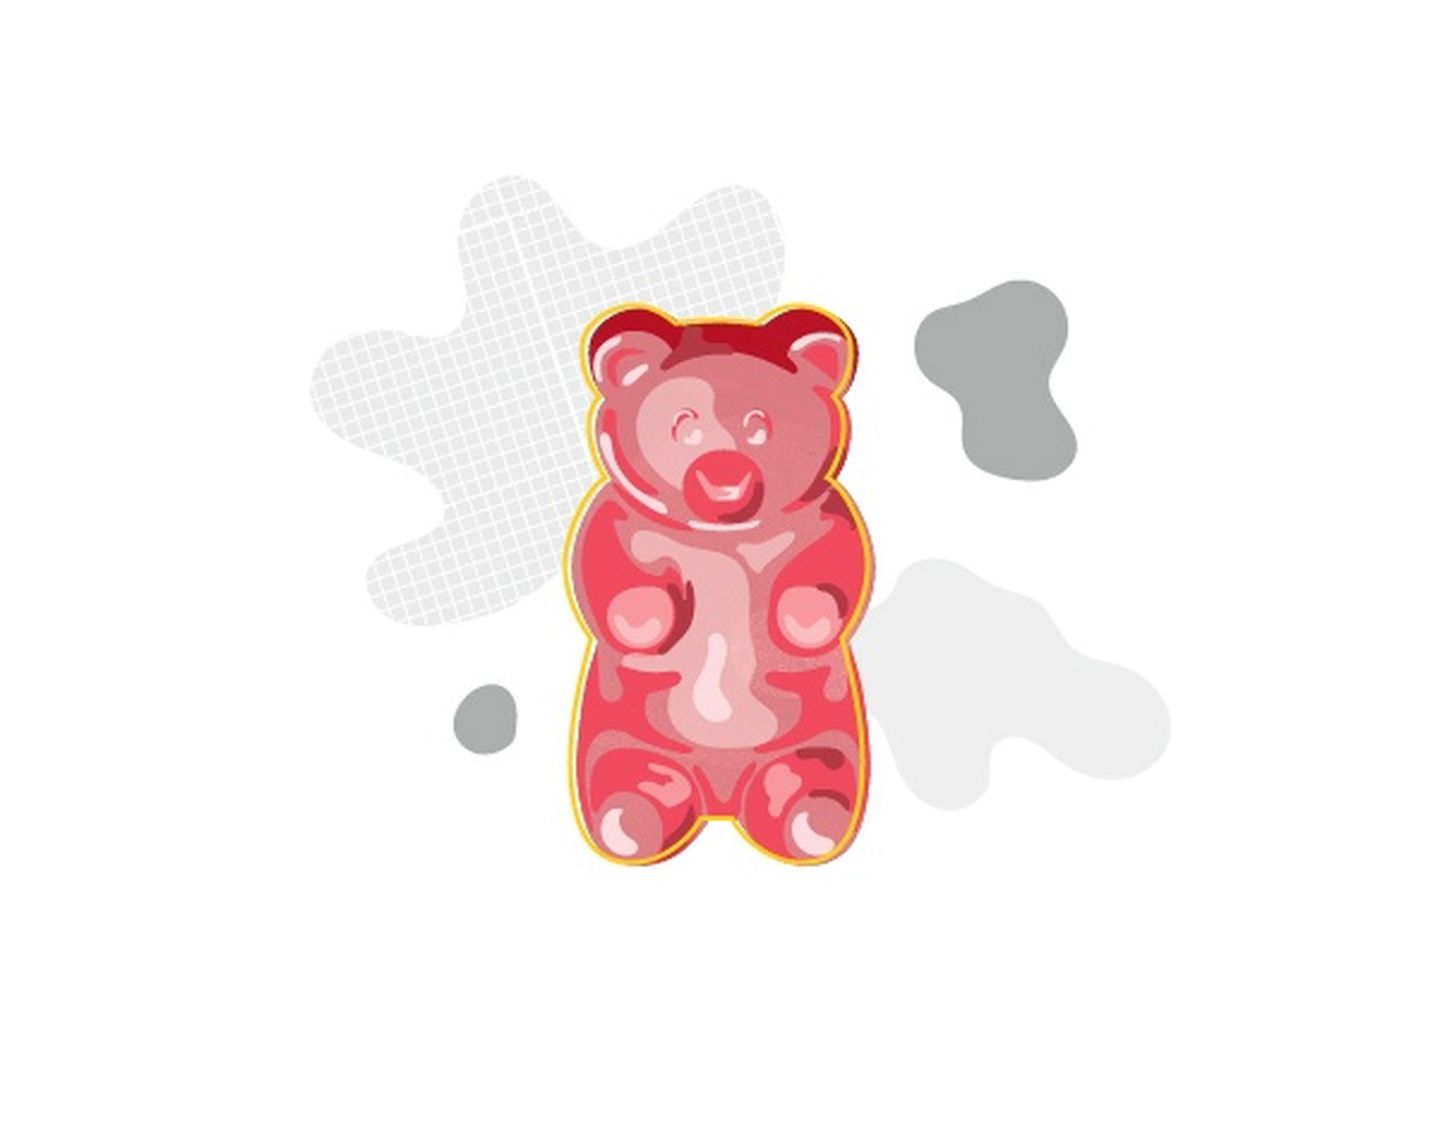 Illustration of a red gummy bear